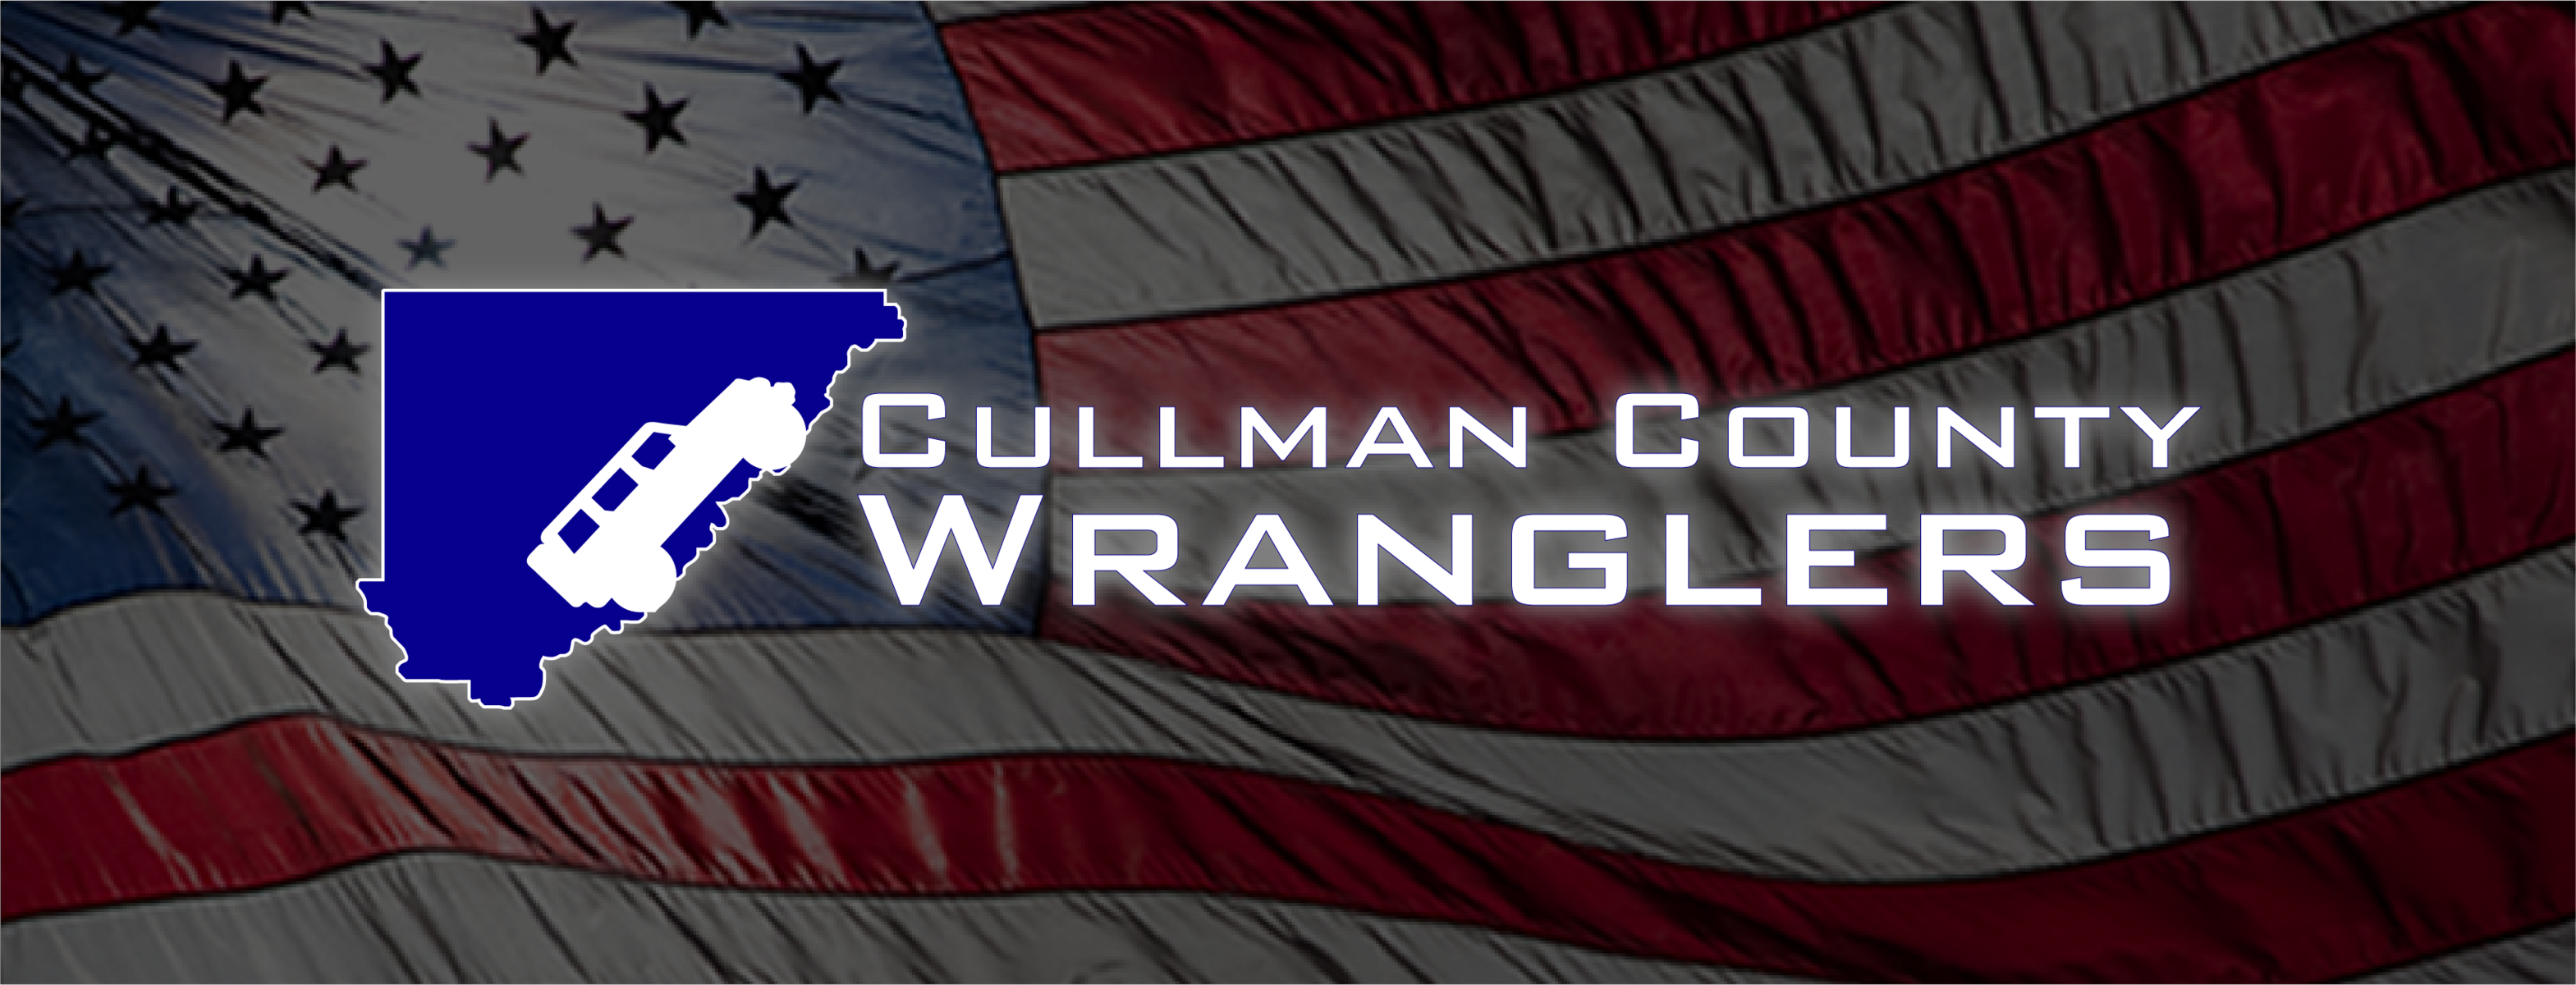 Cullman County Wranglers Merch